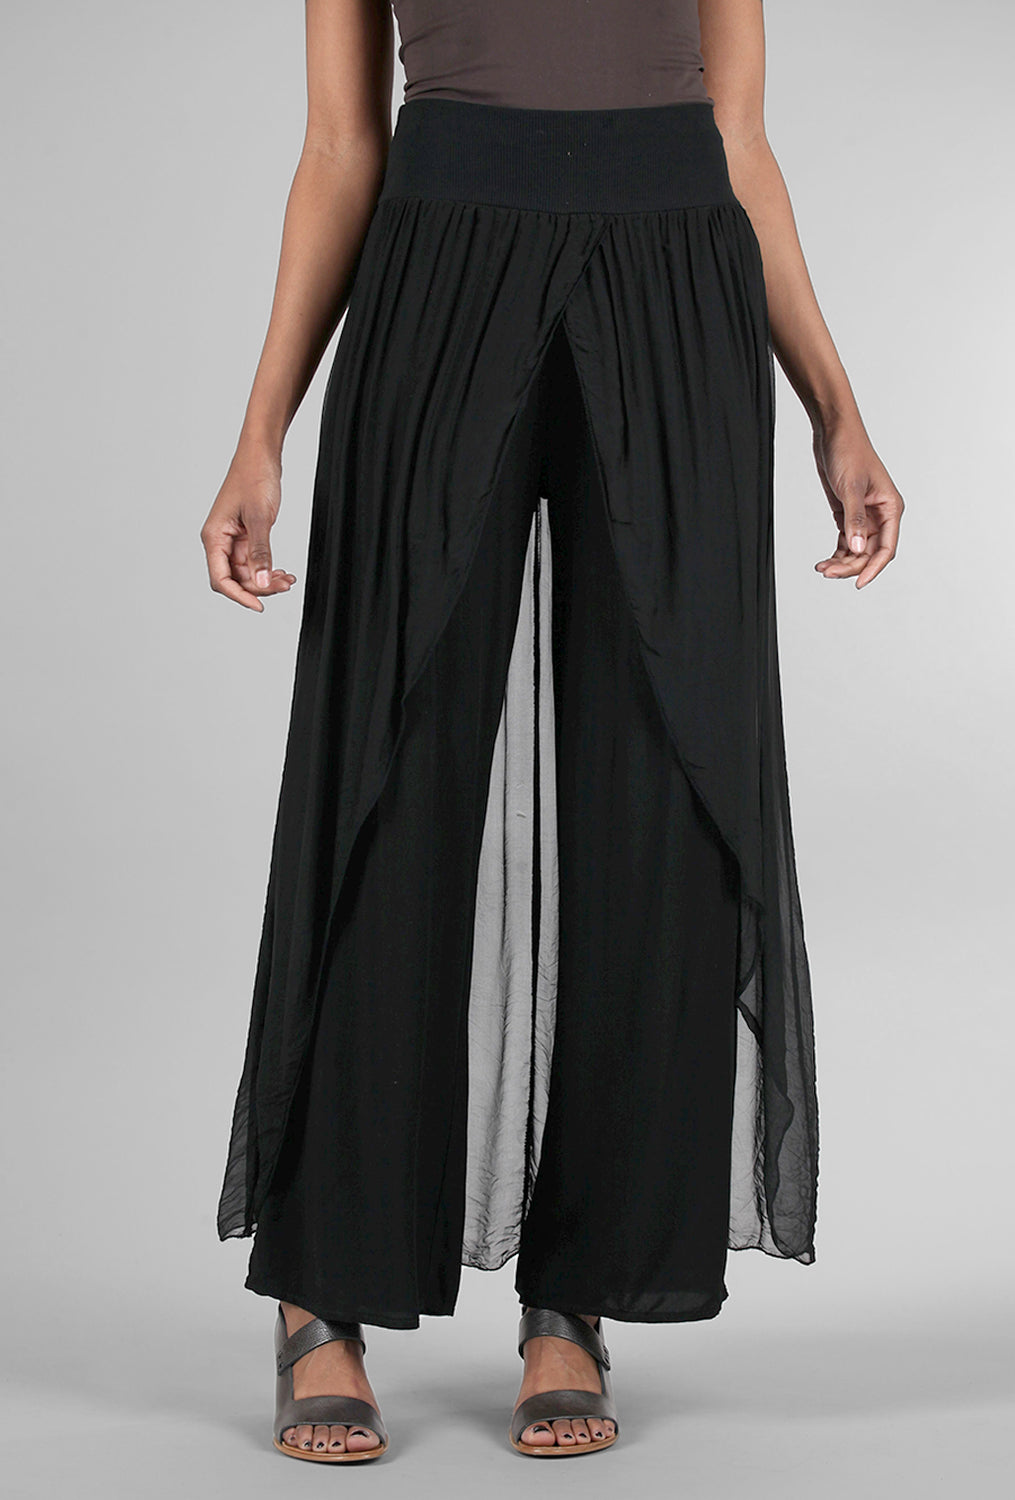 Buy Goggian GOOGIAN Women's Ruffle Palazzo Trouser Pant | Women's Ruffle  Pants Split High Waist Crepe Palazzo Overlay Pant Skirt (Black) at Amazon.in